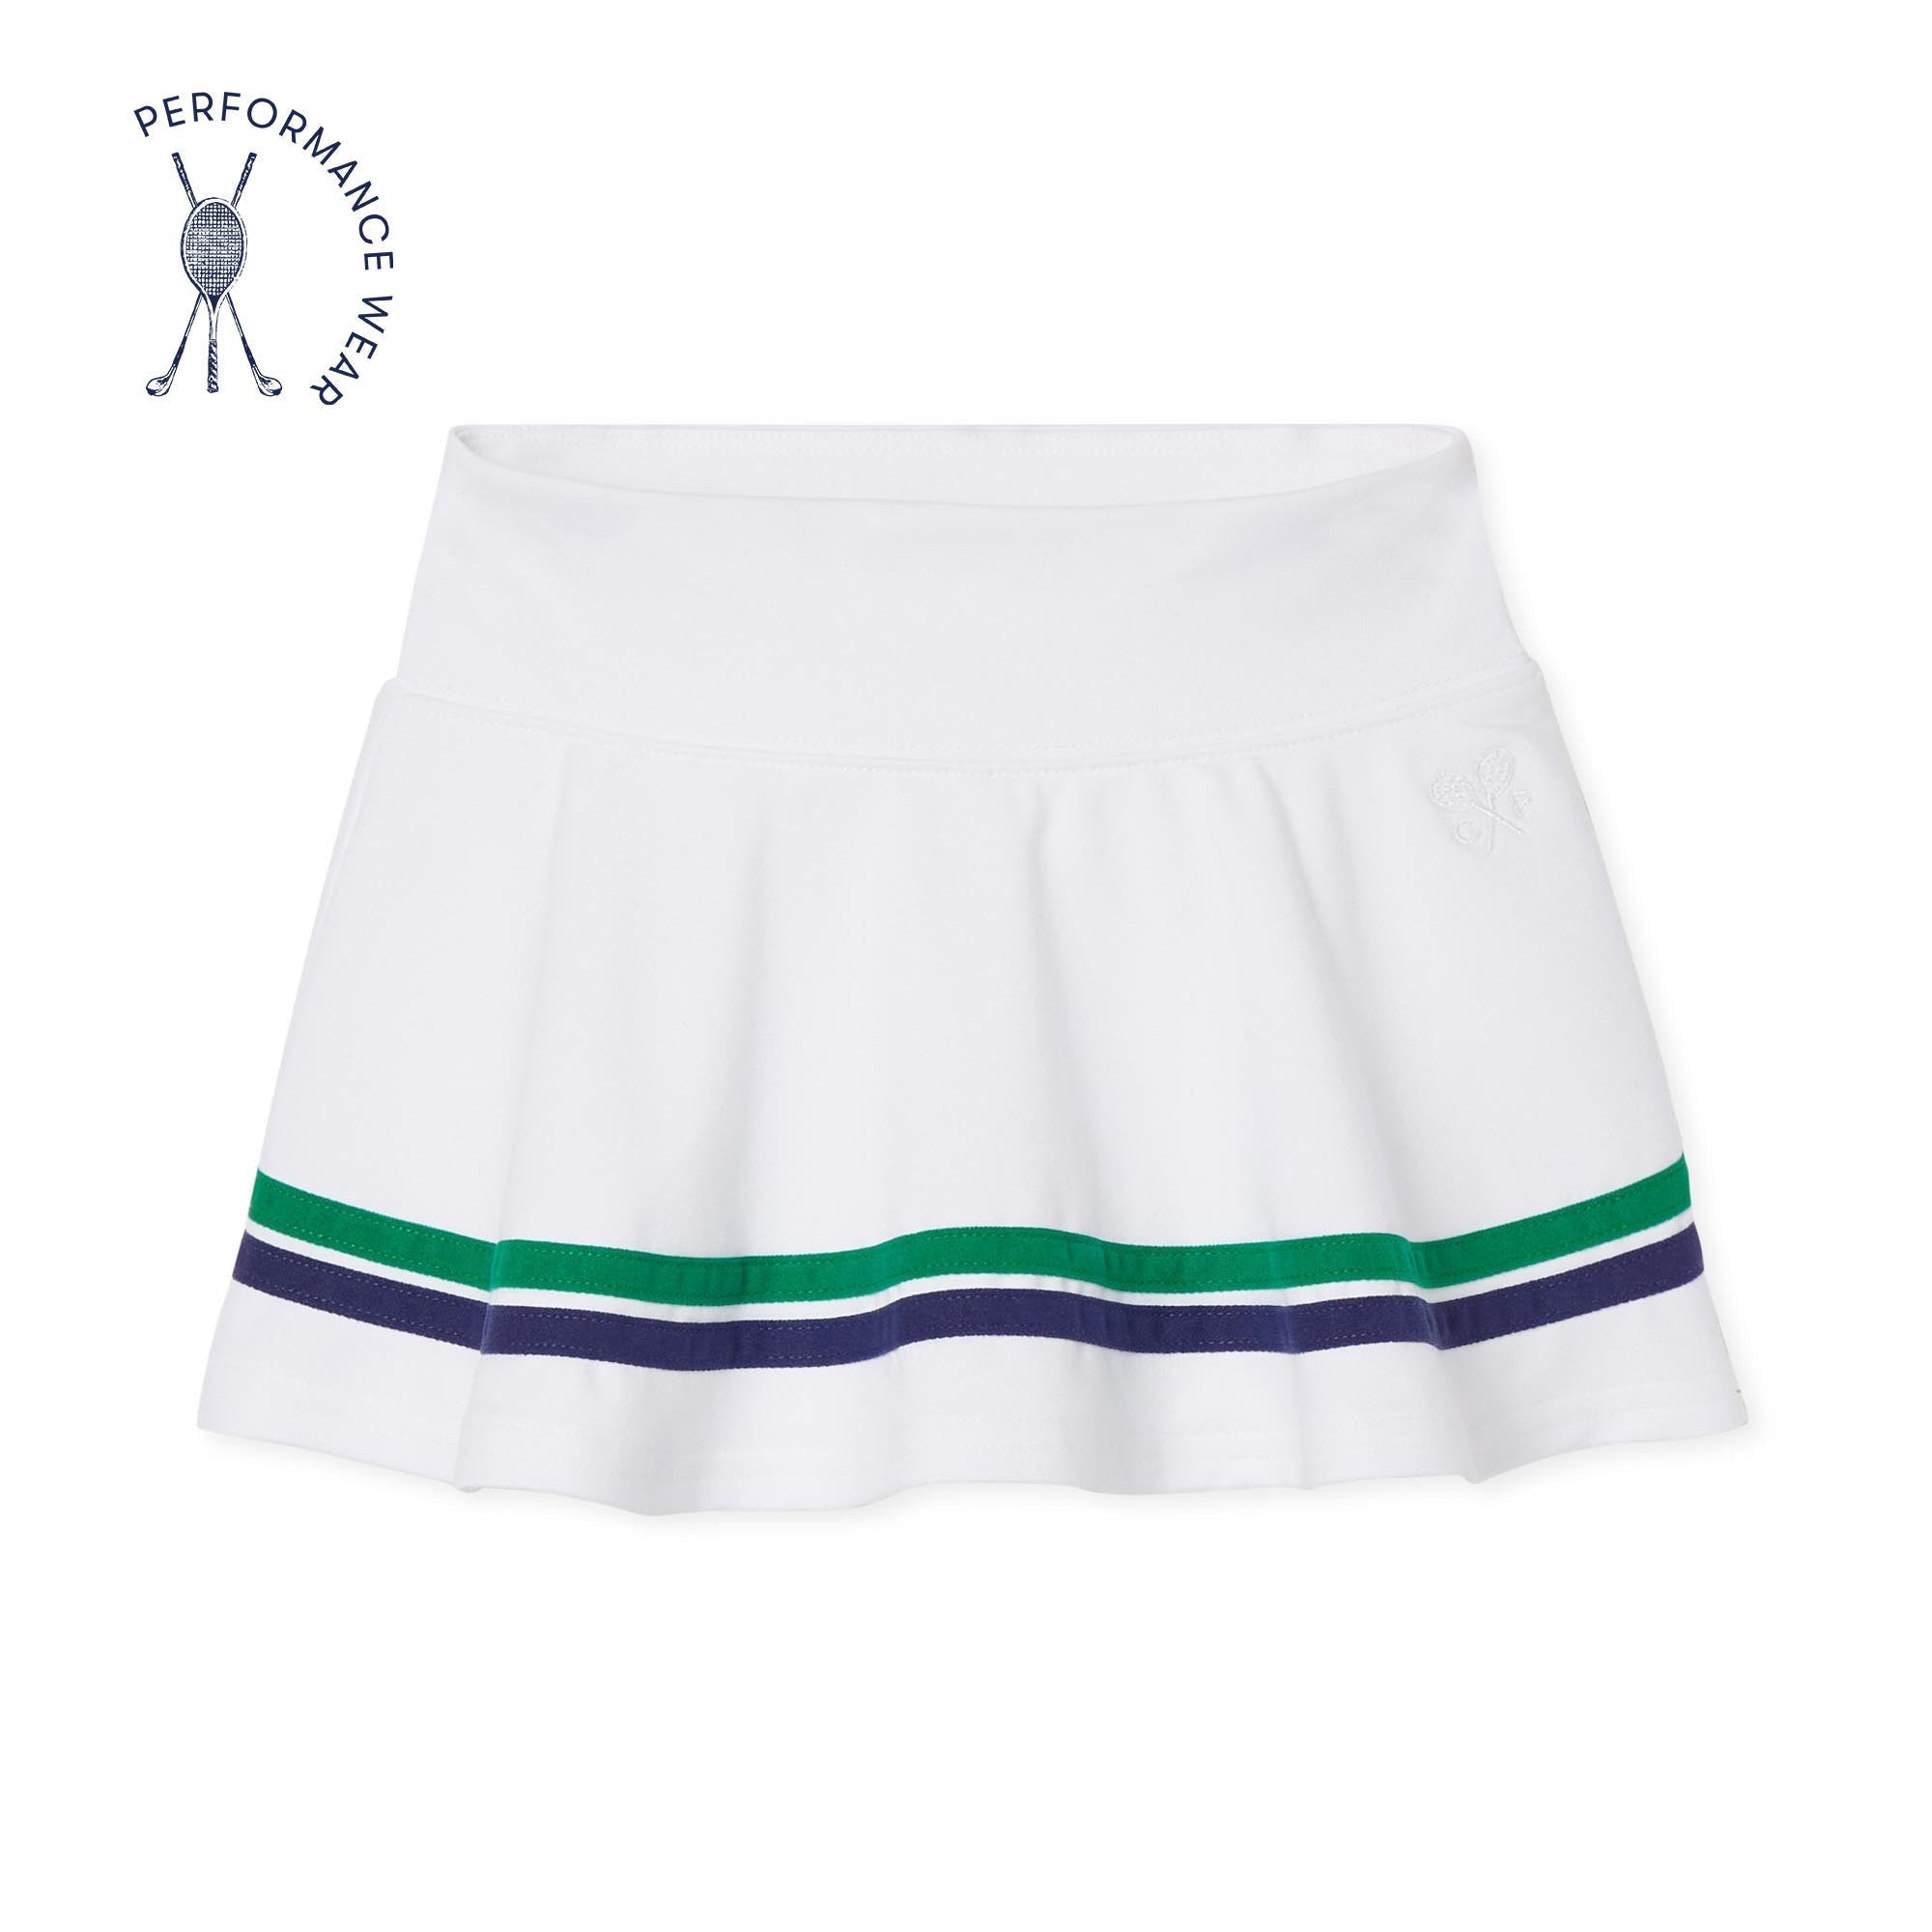 Tinsley Tennis Performance Skort, Bright White